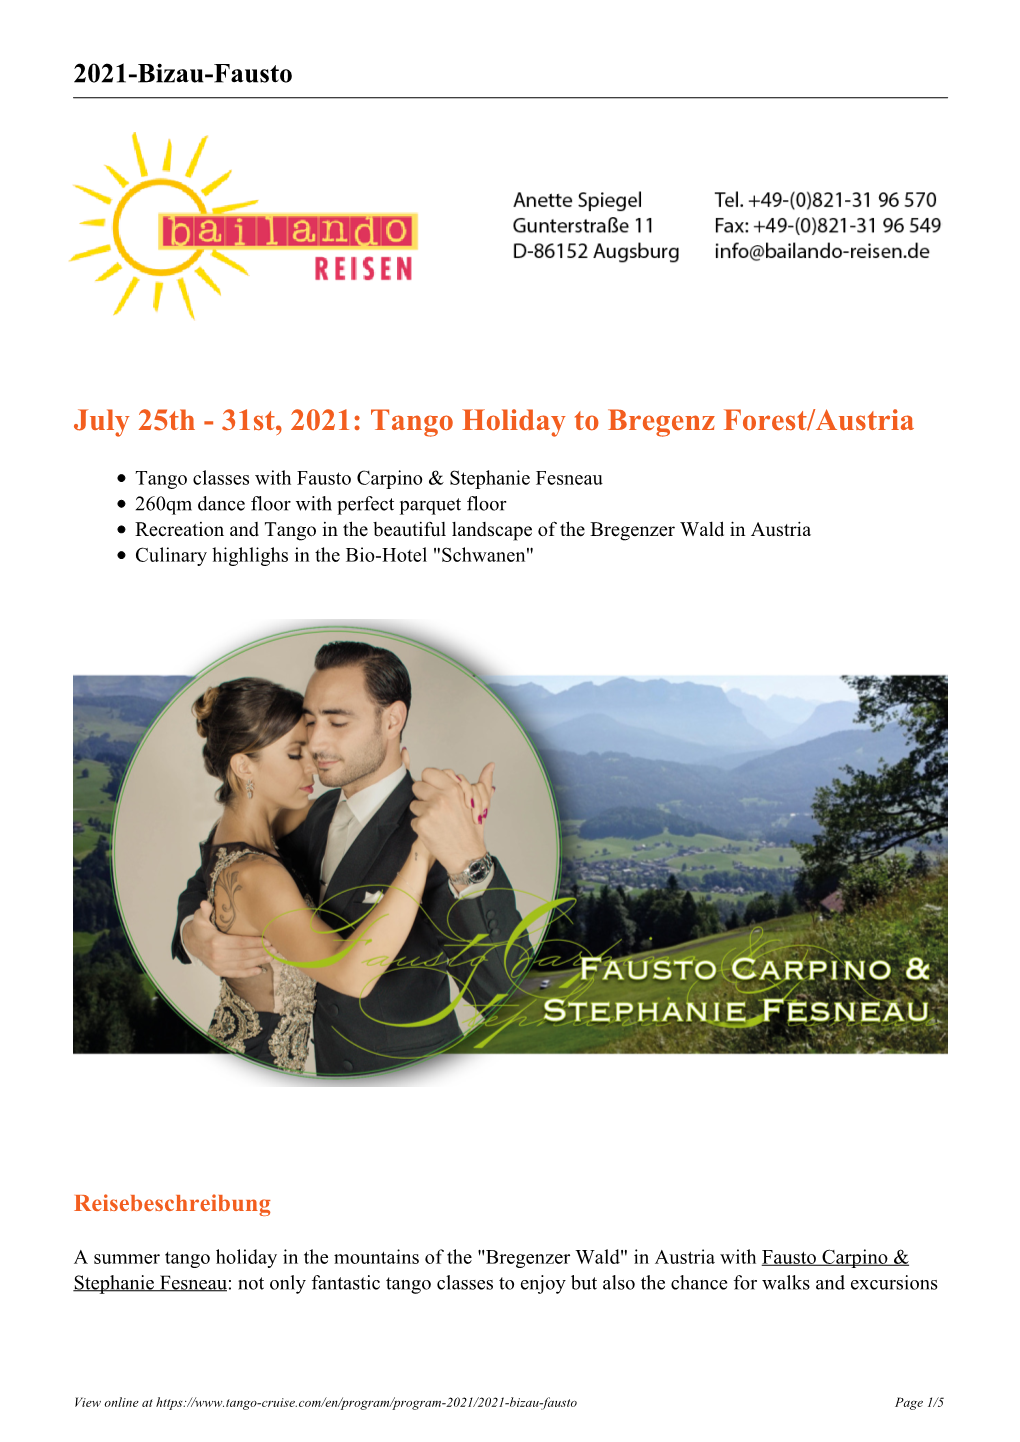 Tango Holiday to Bregenz Forest/Austria